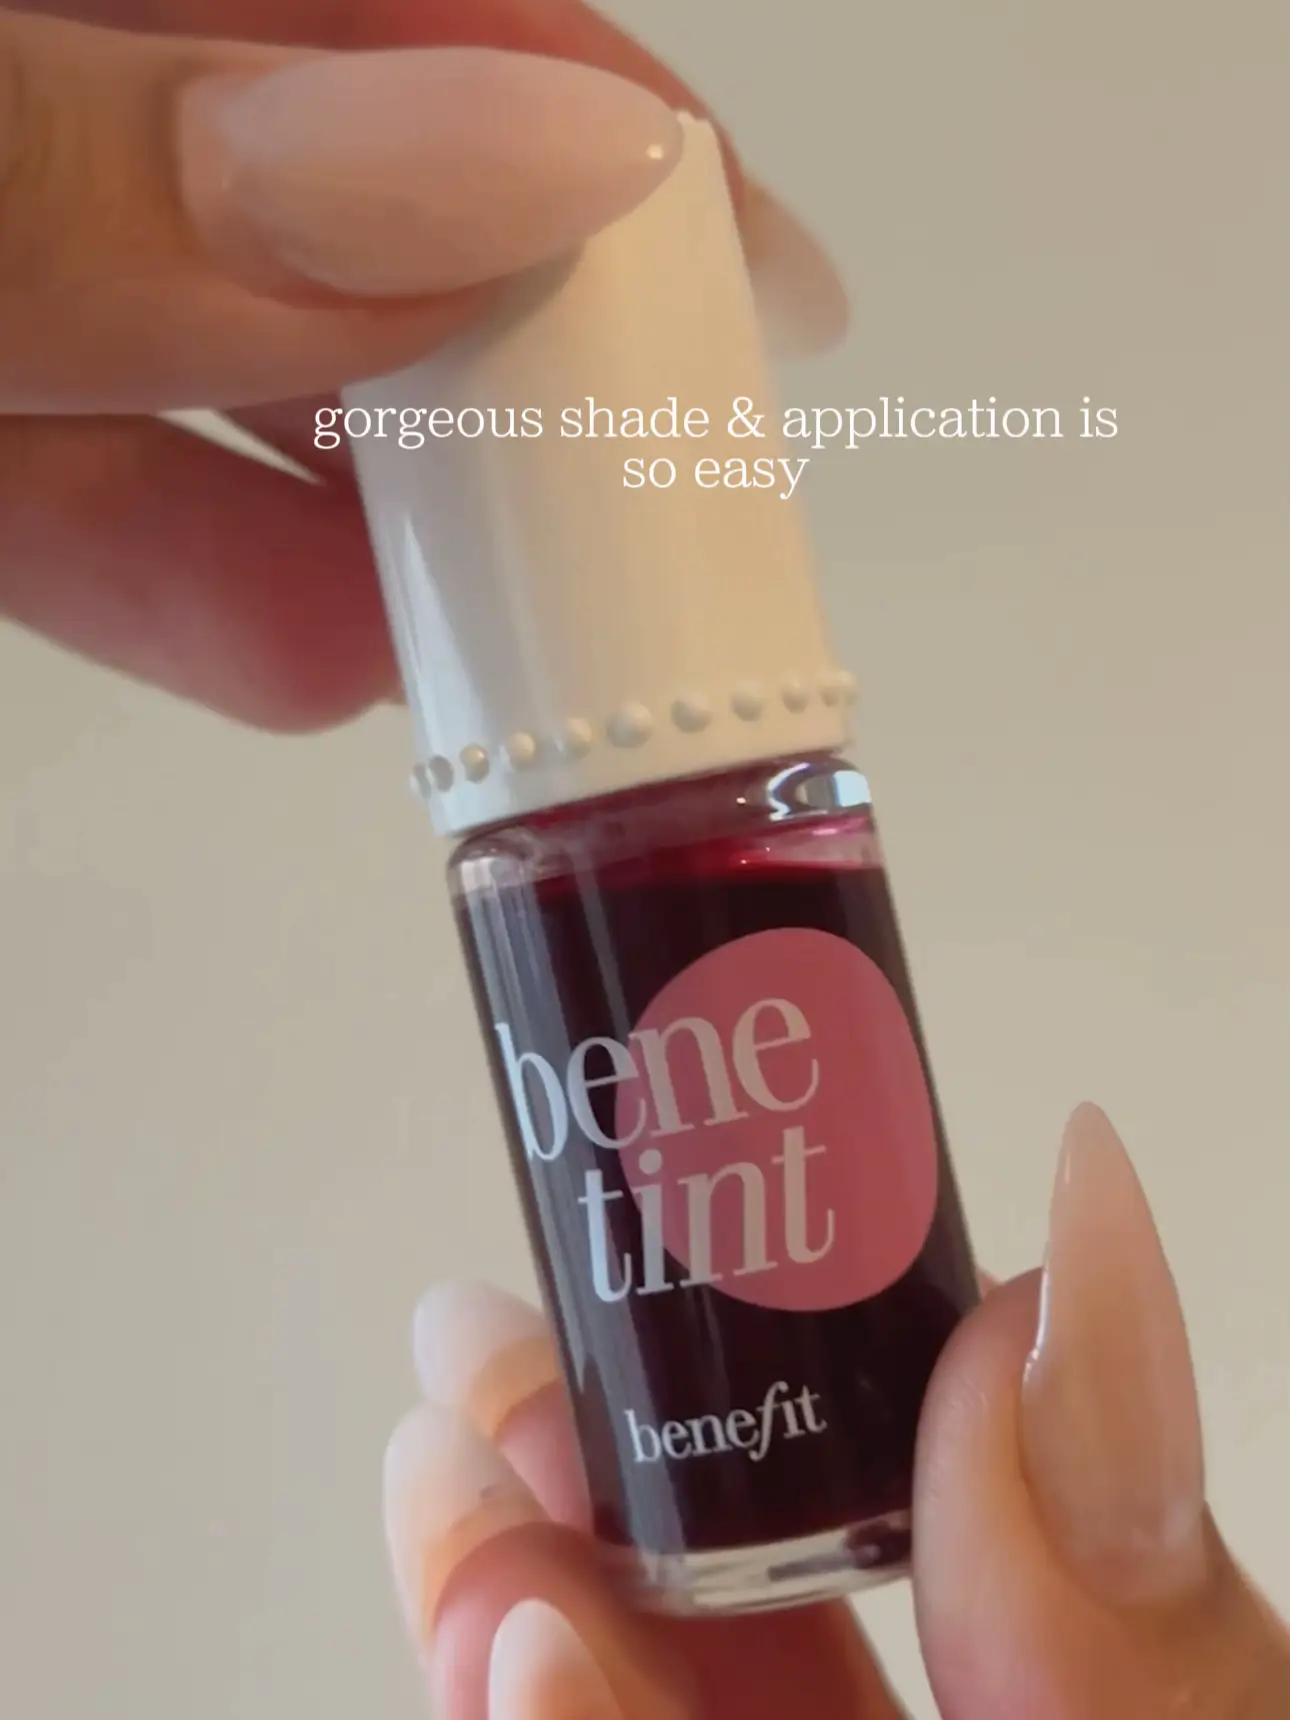 benefit Floratint Desert Rose-Tinted Lip and Cheek Tint 6ml - LOOKFANTASTIC